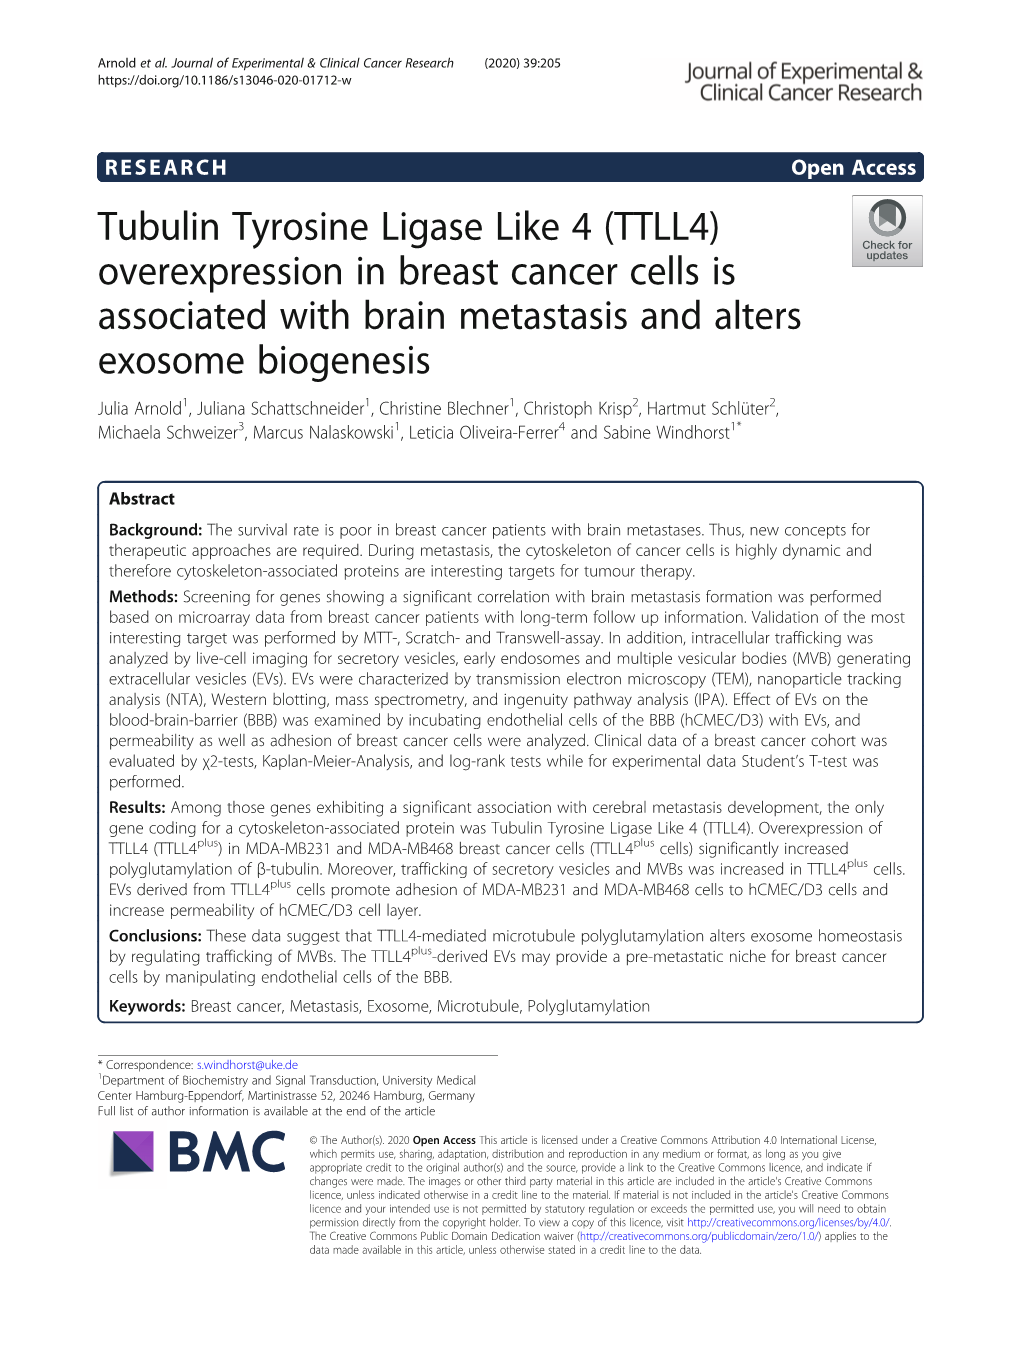 Tubulin Tyrosine Ligase Like 4 (TTLL4) Overexpression in Breast